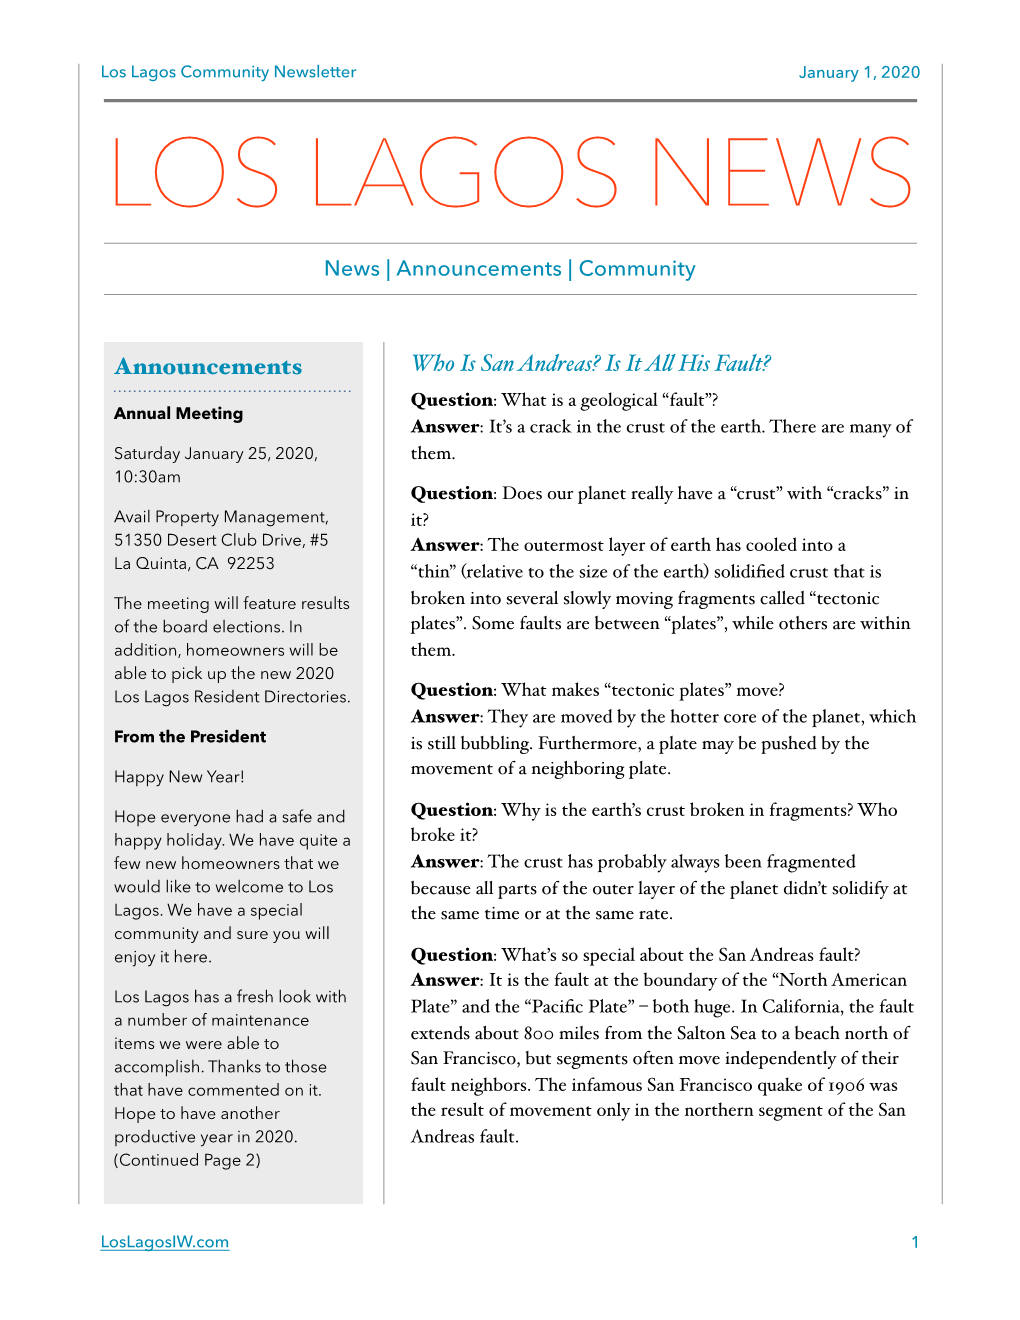 LOS LAGOS NEWS News | Announcements | Community